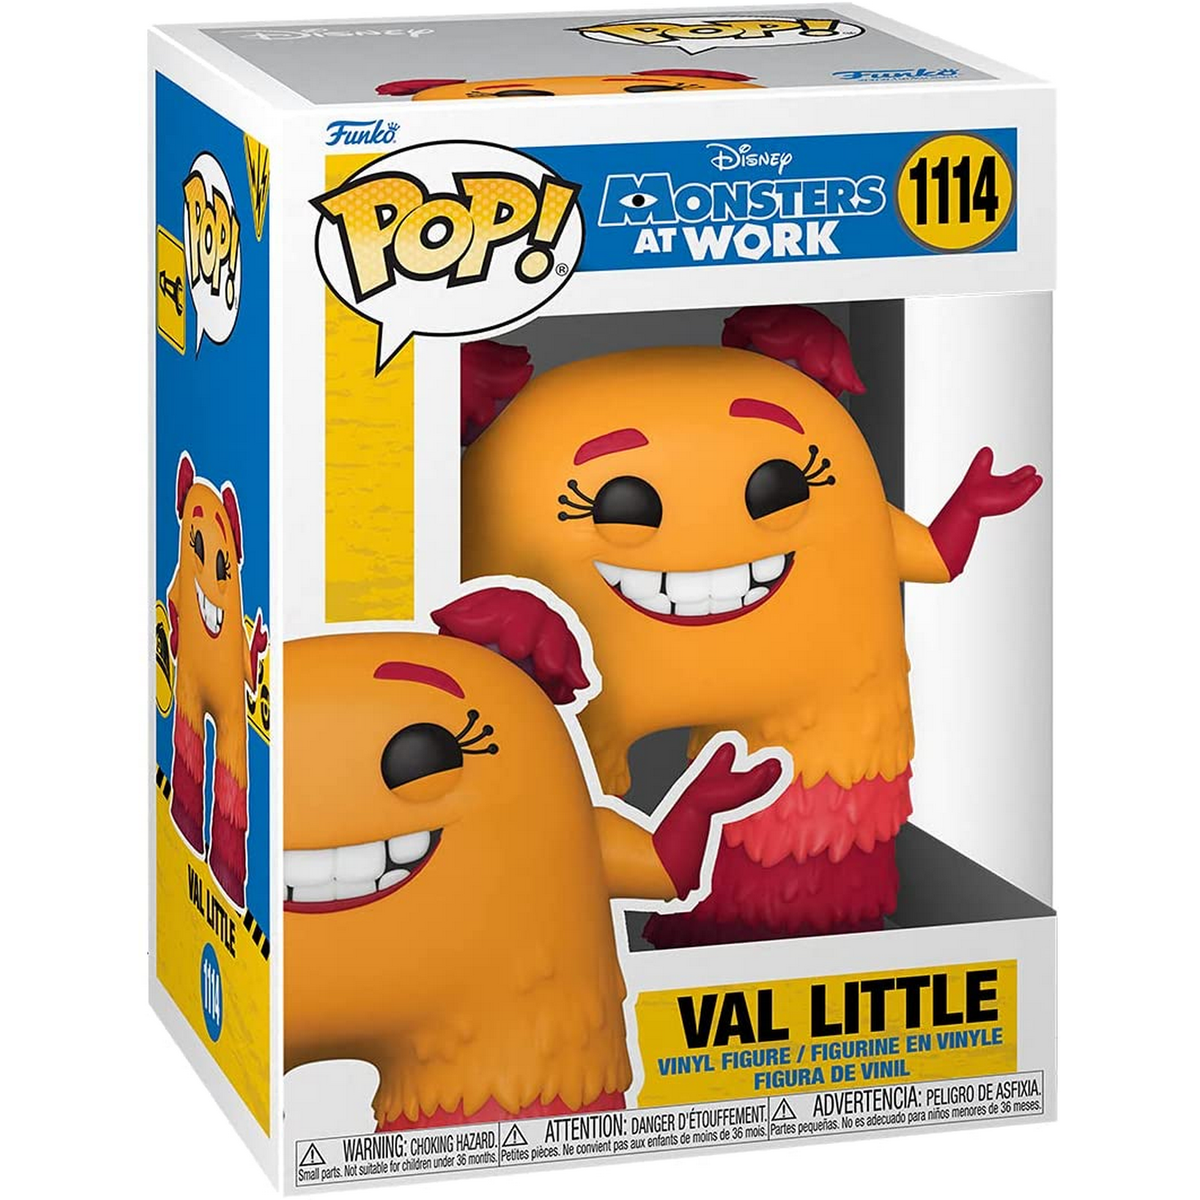 POP! - Work Little at Funko Disney Monsters Val